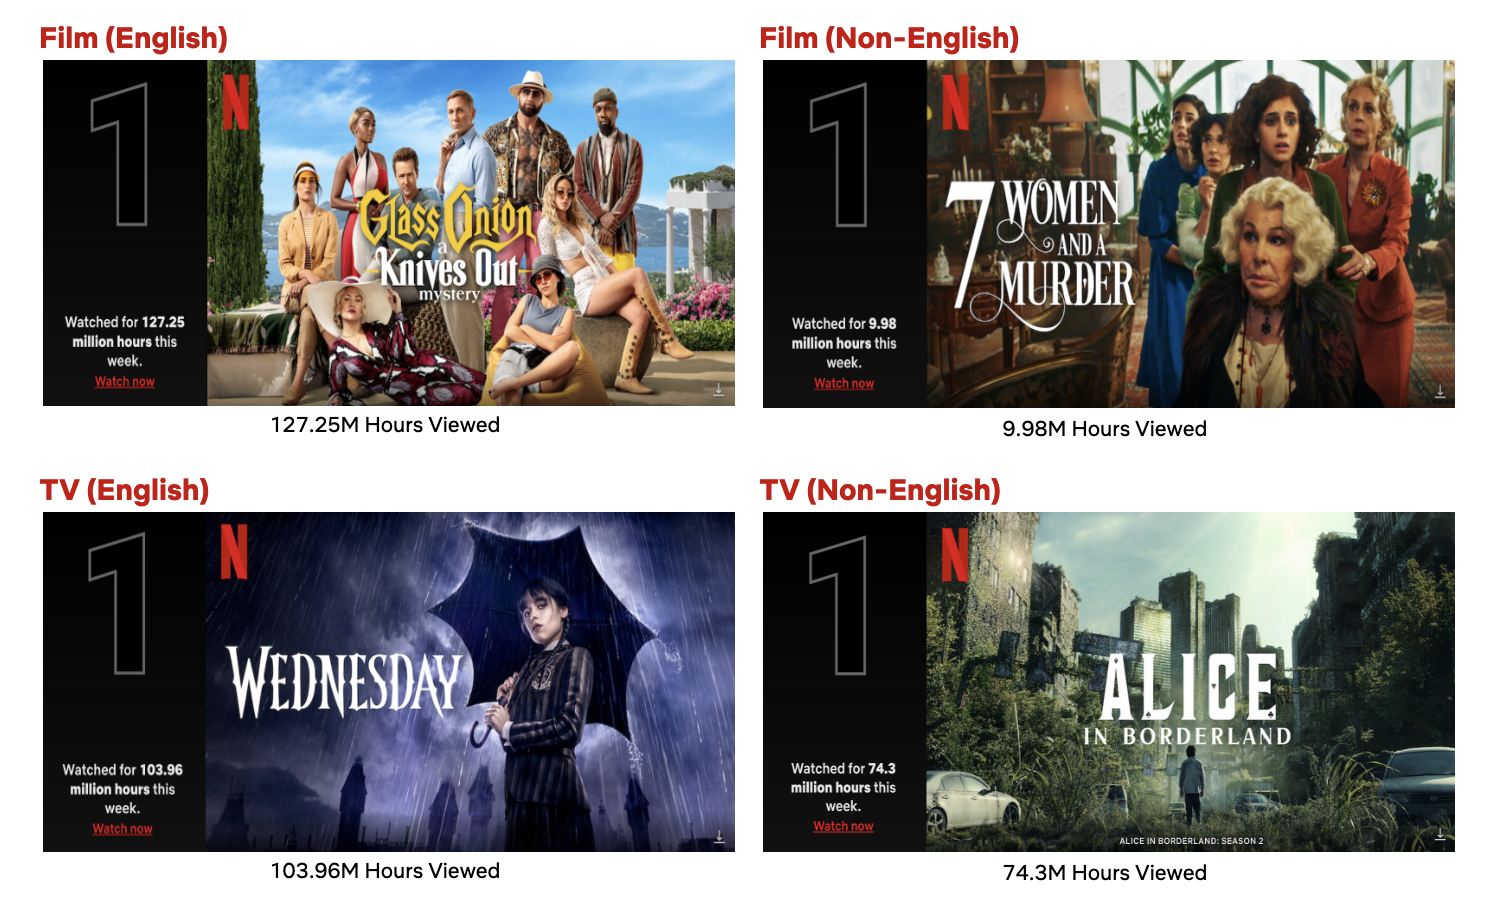 Top 10 Best Netflix Original Series to Watch Now! 2023 